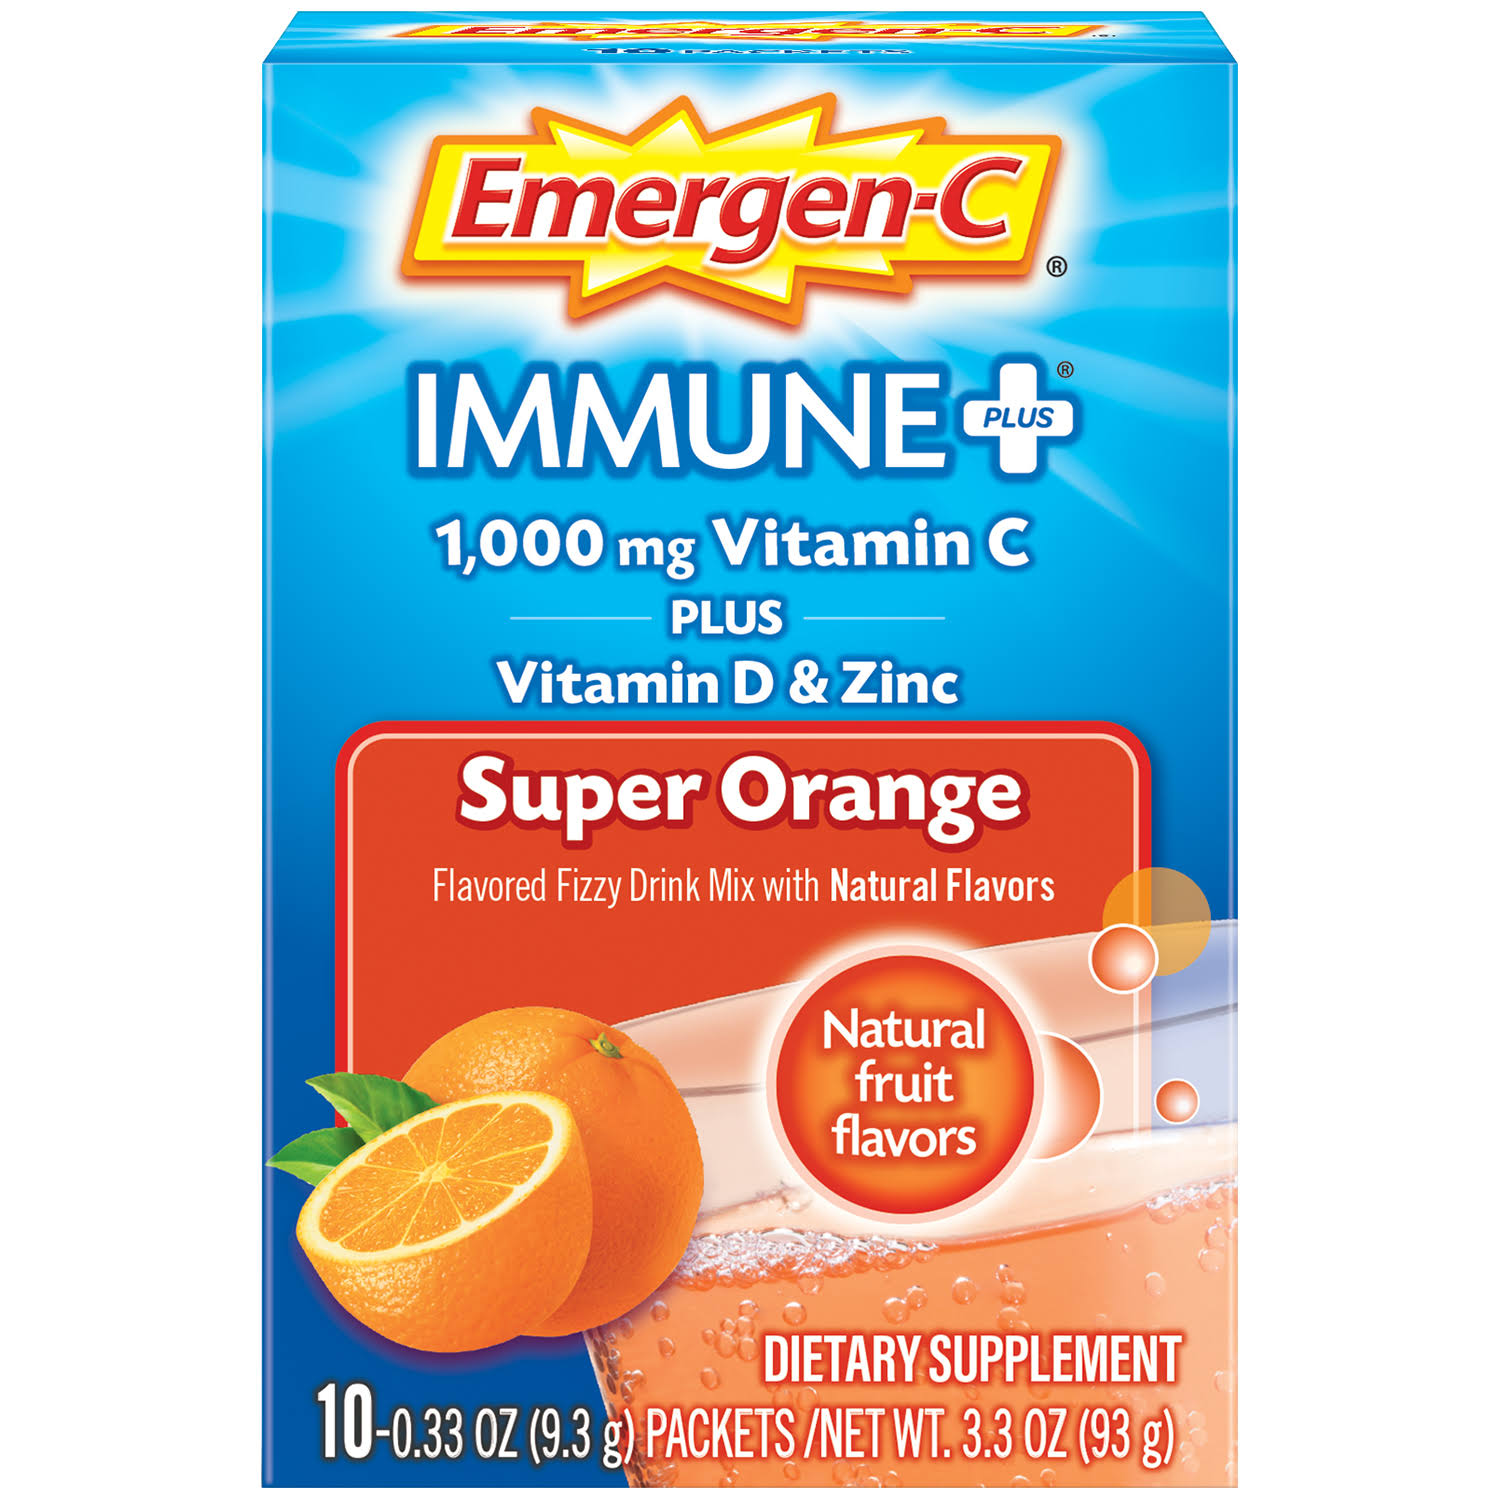 Emergen-C Immune Plus Dietary Supplement - Super Orange Flavor, 10ct